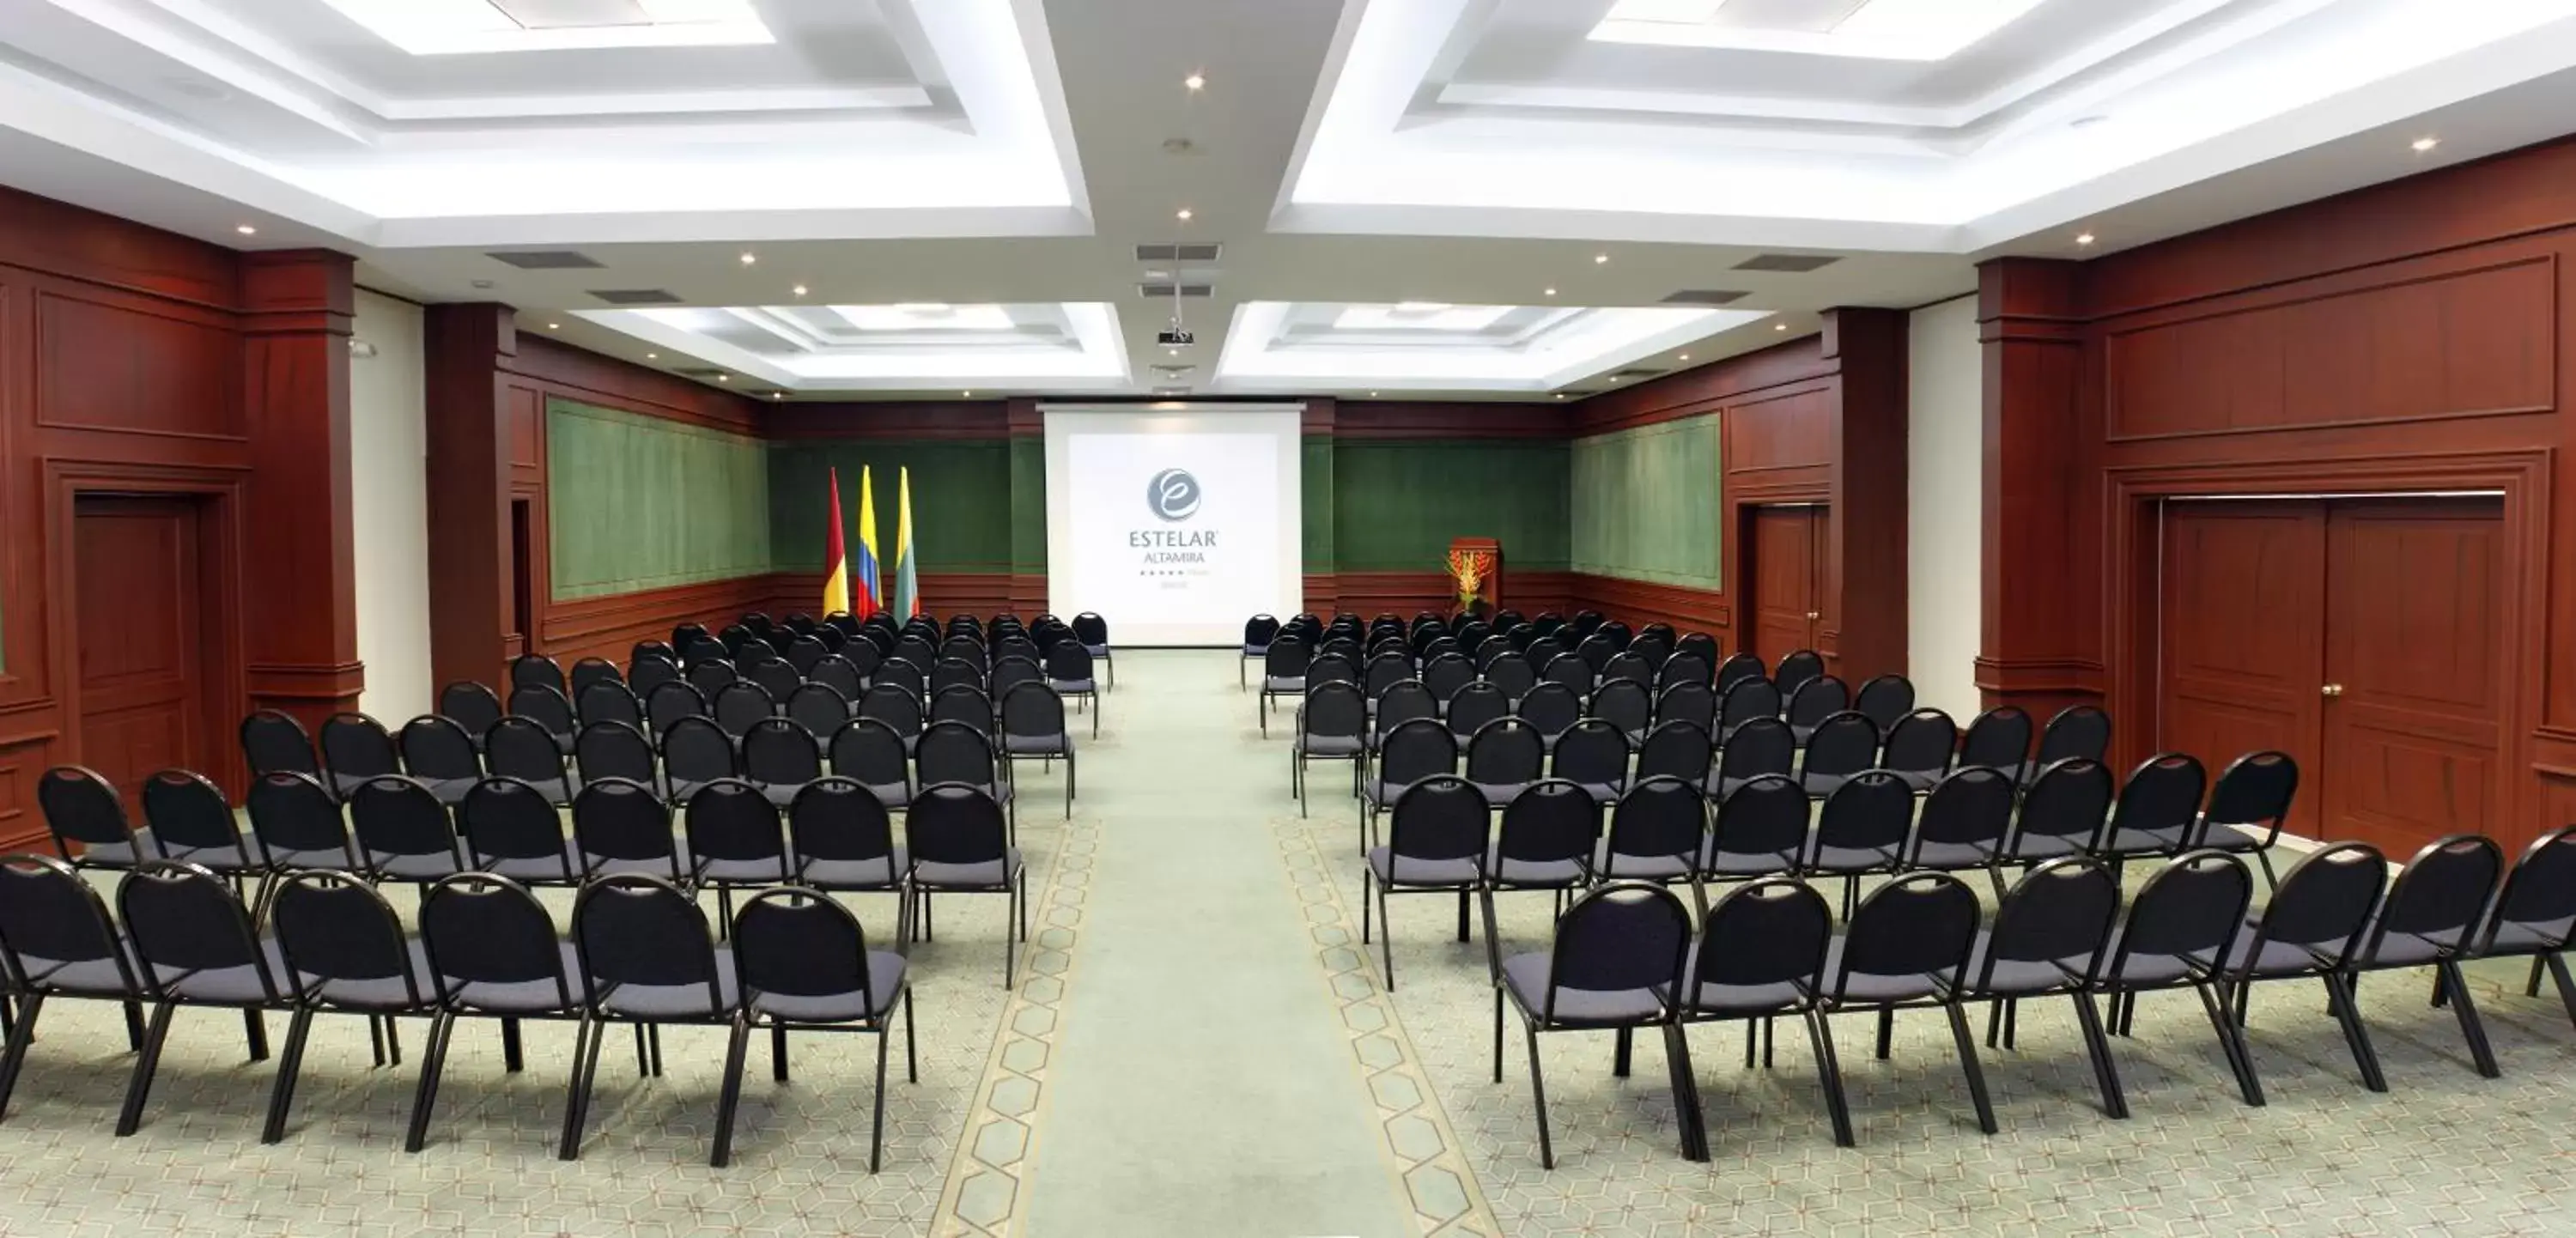 Meeting/conference room in Hotel Estelar Altamira